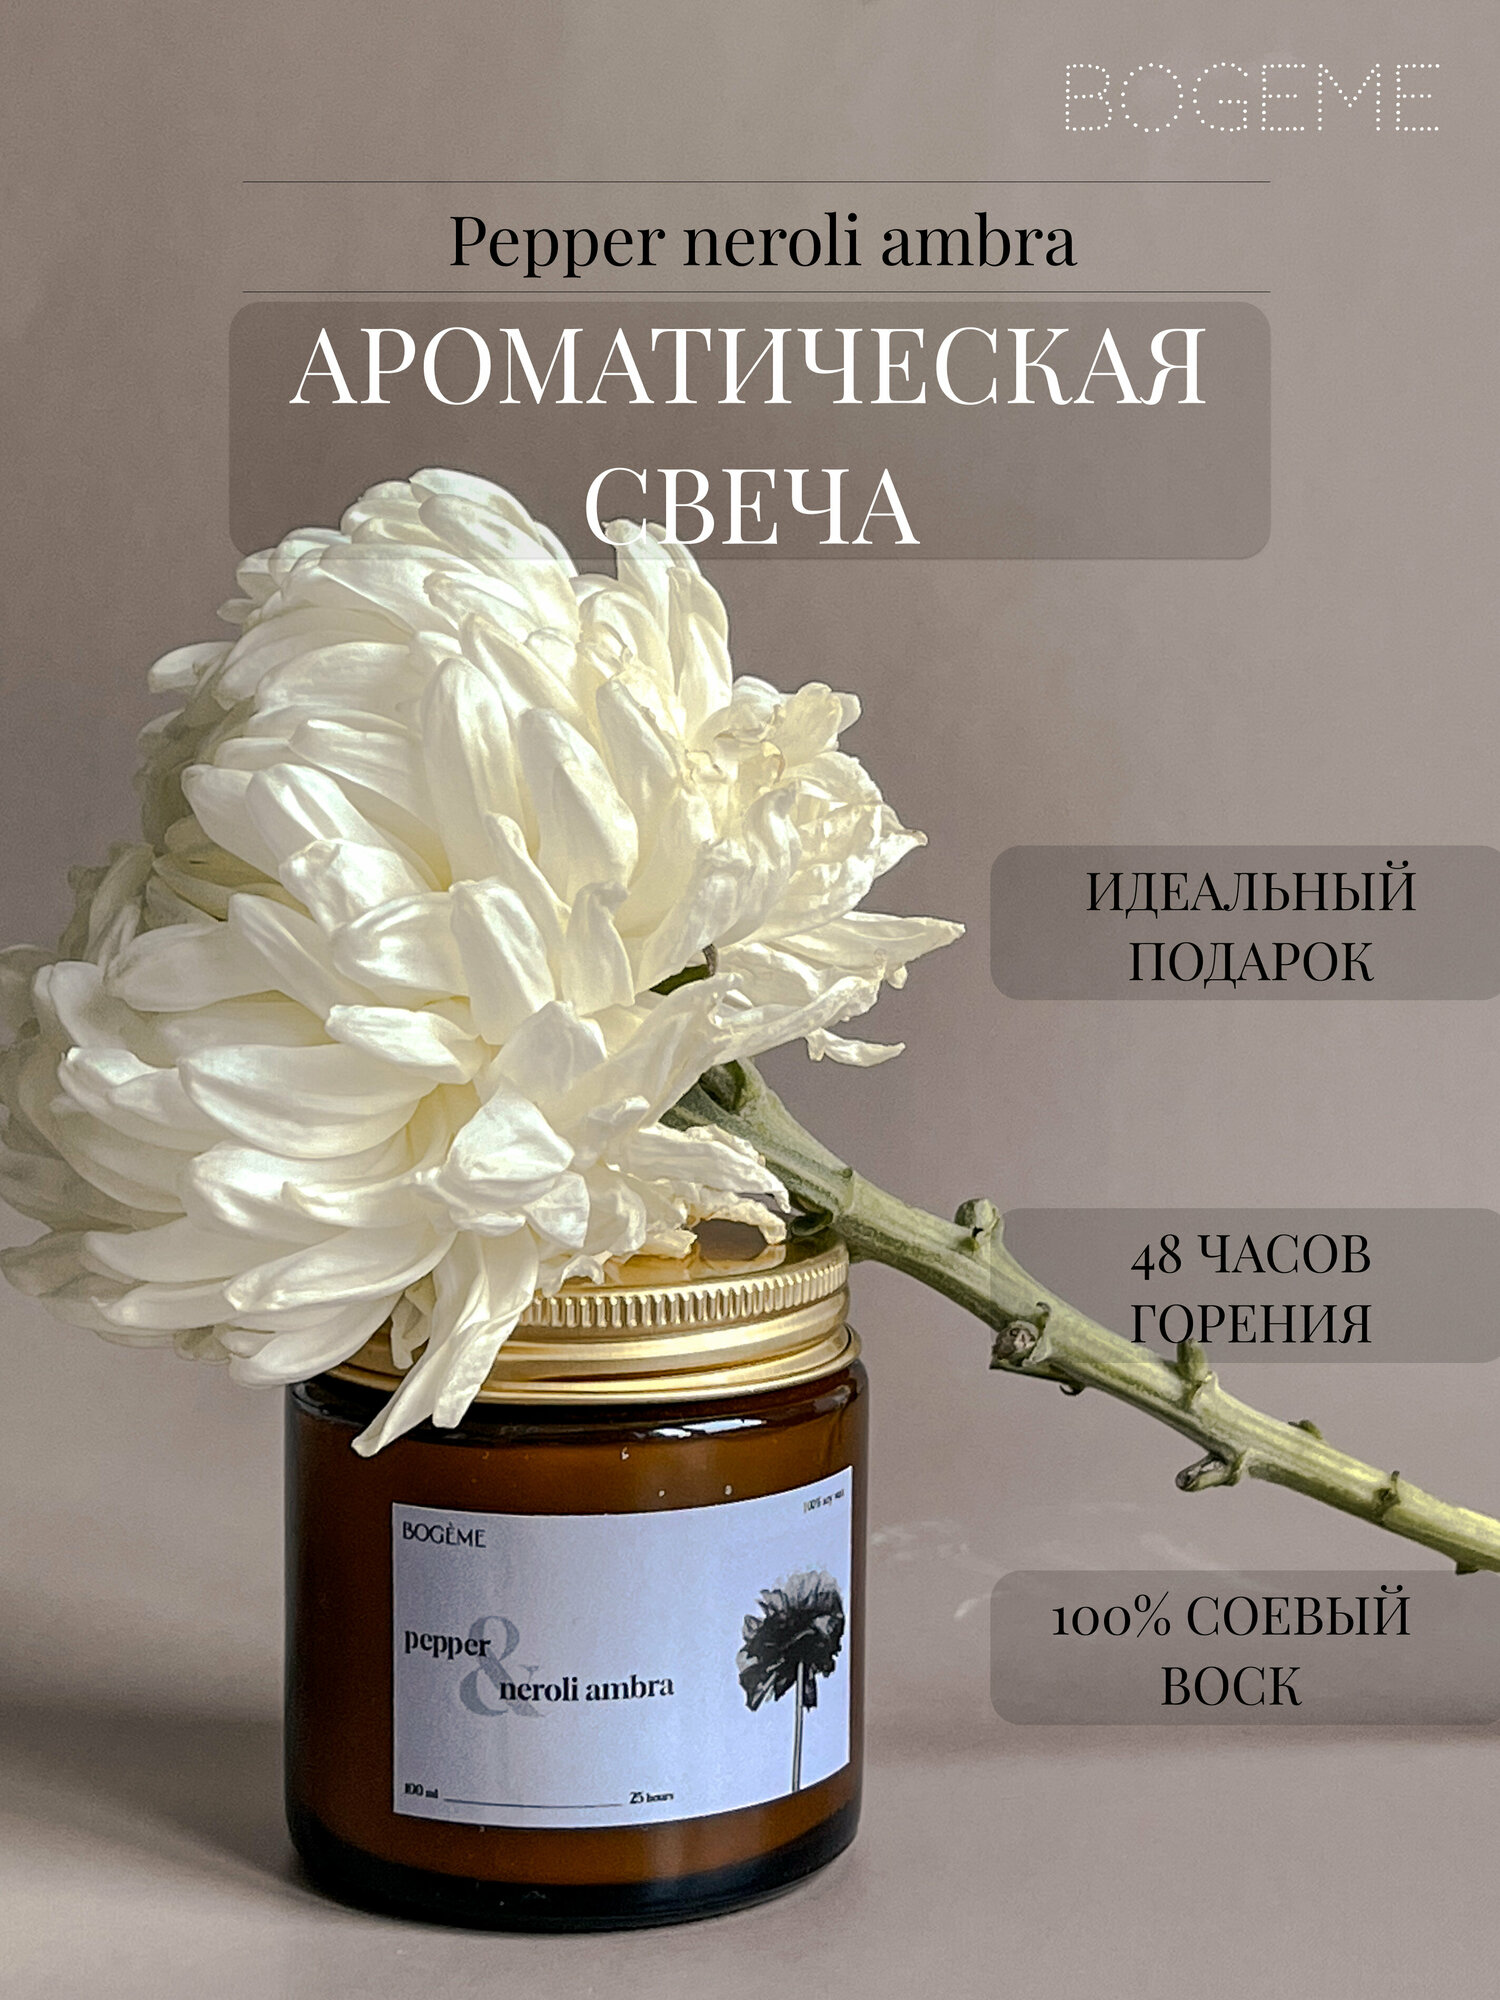 Ароматная свеча "BOGEME" с ароматом Перца, нероли, амбра , 100 мл